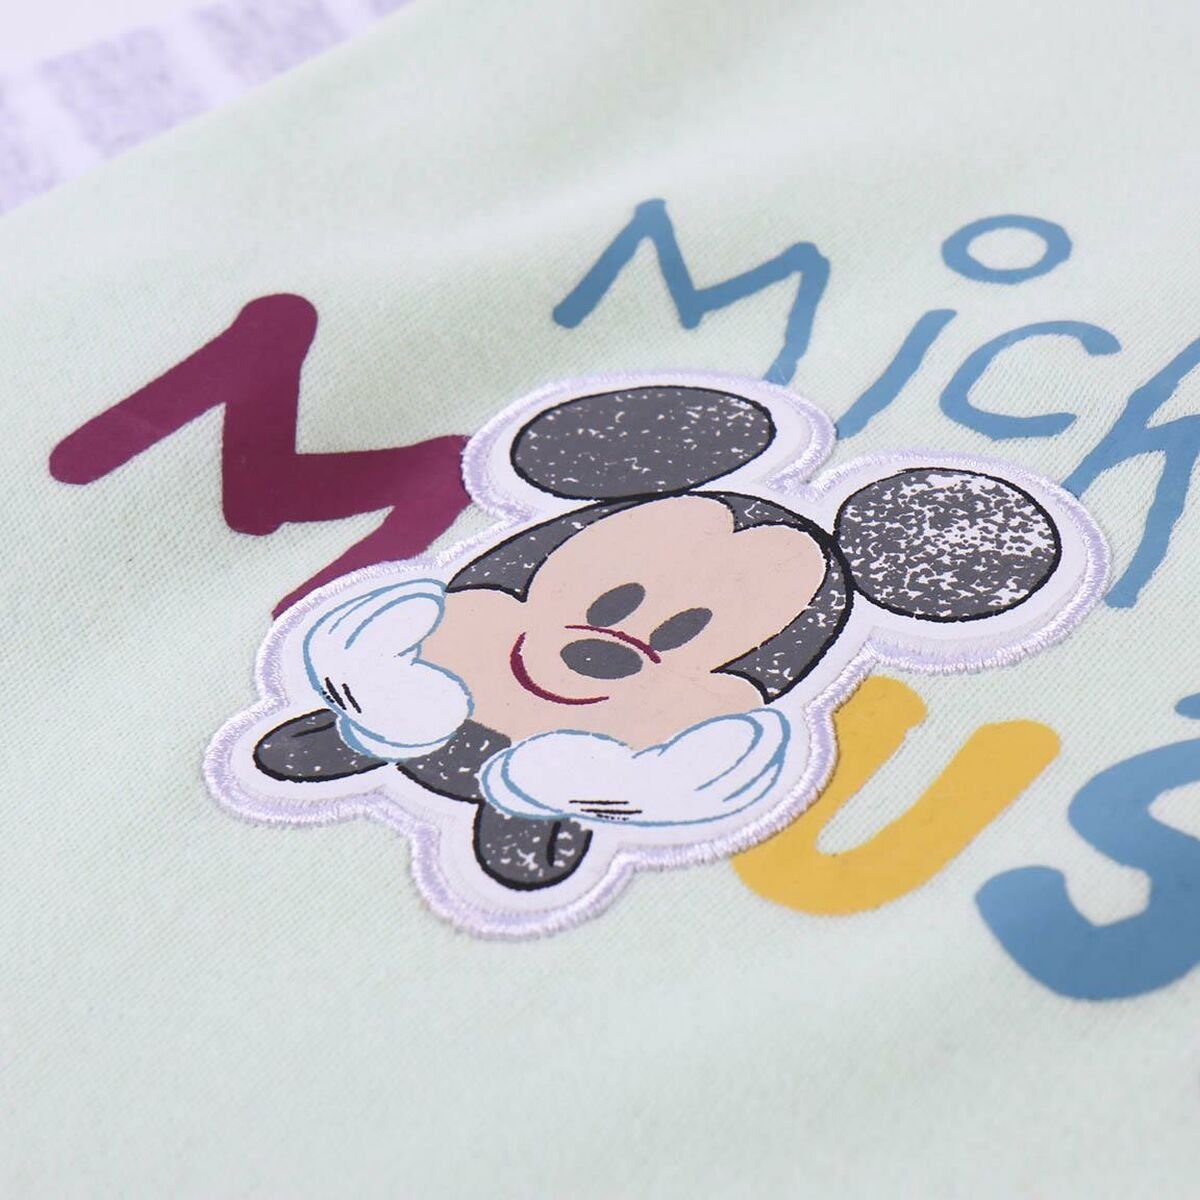 Disney Mickey Mouse Pyjama Monate Pyjama 2 Kinder Schlafanzug Nachtwäsche Micke Teiler 18 Langarm